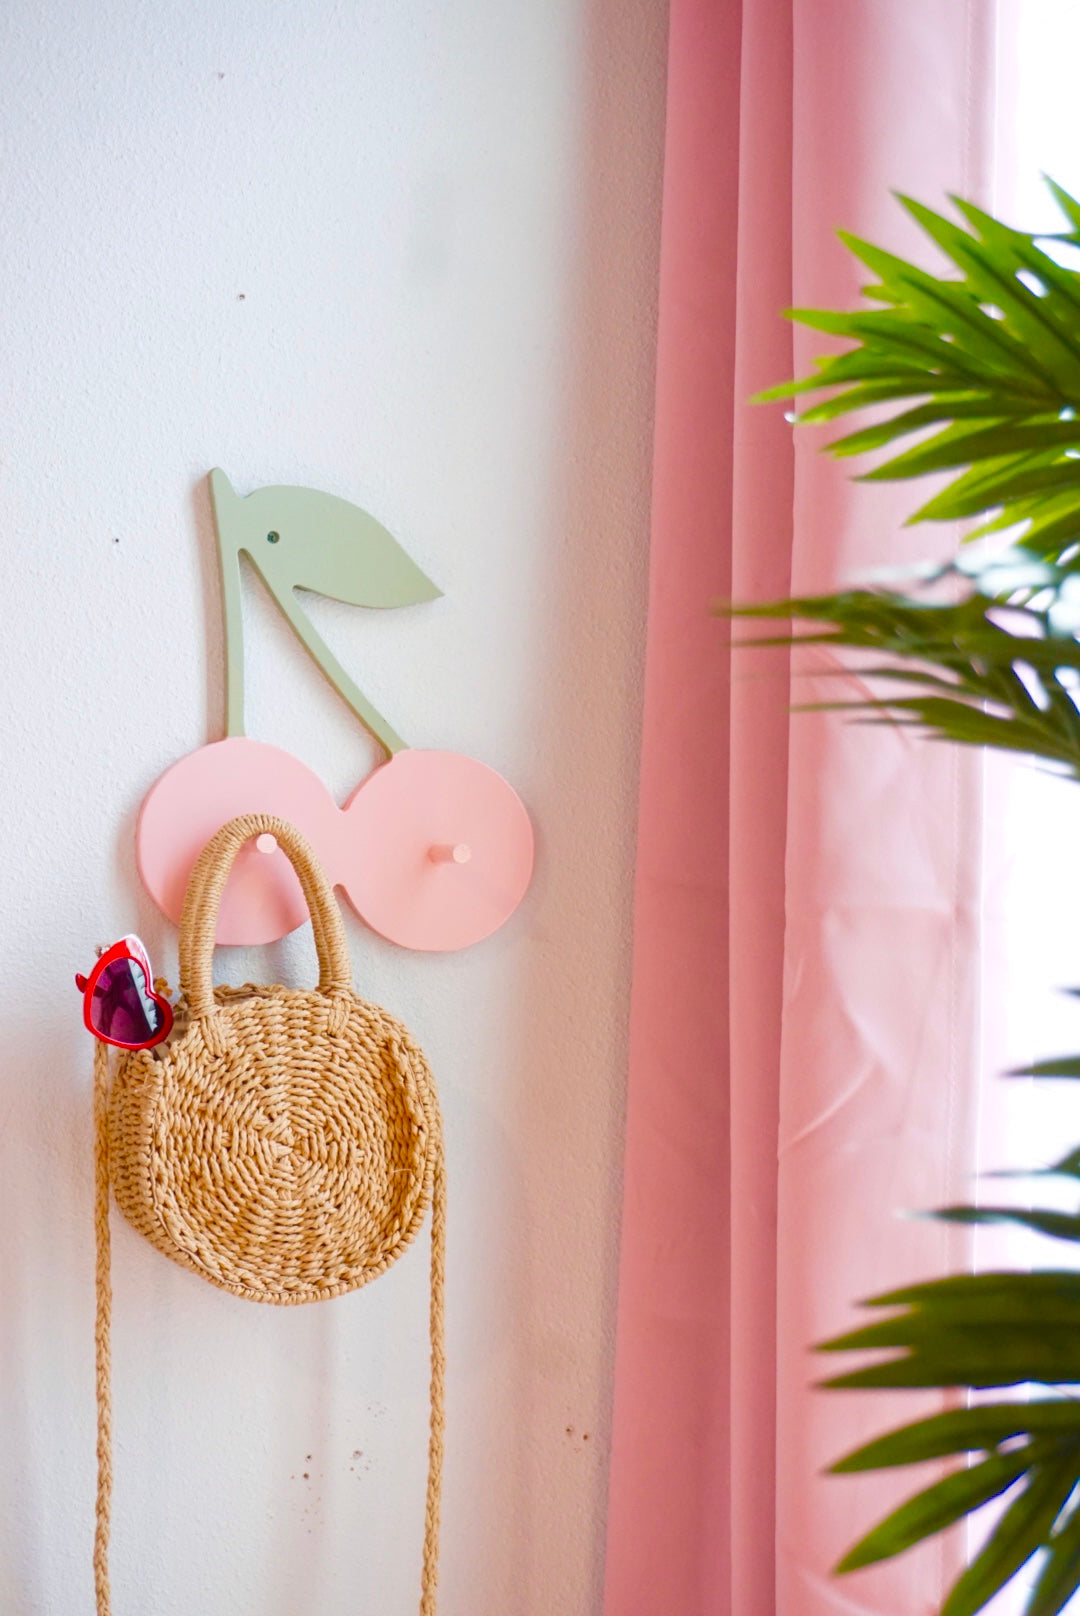 Flamingo Purse Hanger Hook for Table